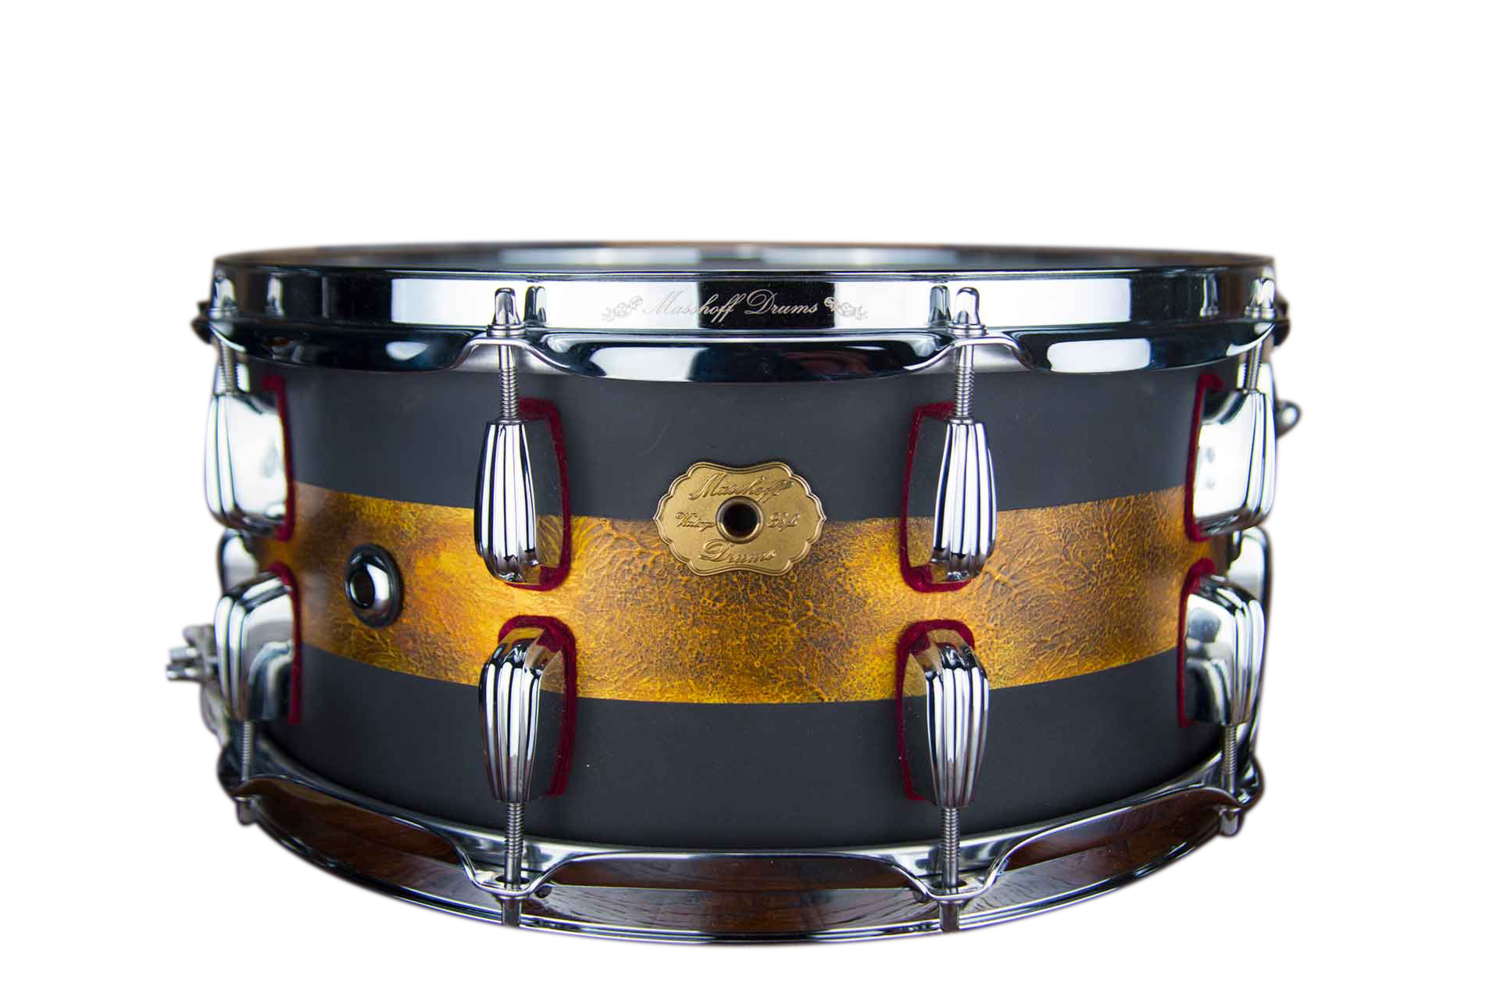 Z___Masshoff Drums 14"x 6.5" Premium Snare Avalon / Duco King / Dye Cast